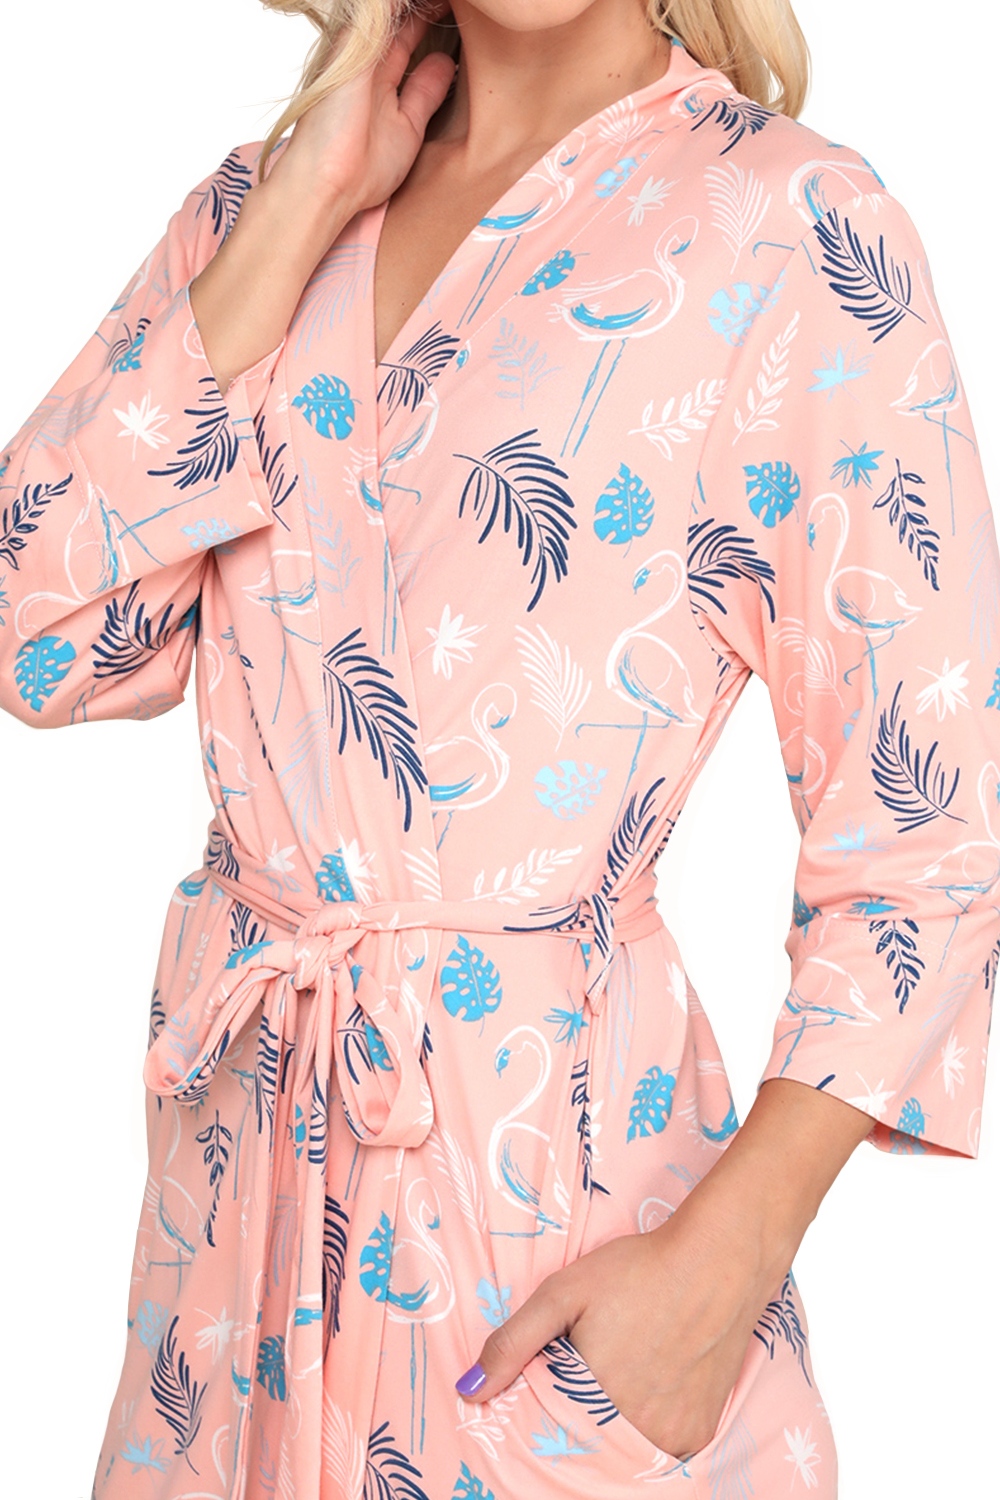 Doublju Women's Kimono Robe Sleepwear Pajama (Plus Size Available) - image 4 of 5